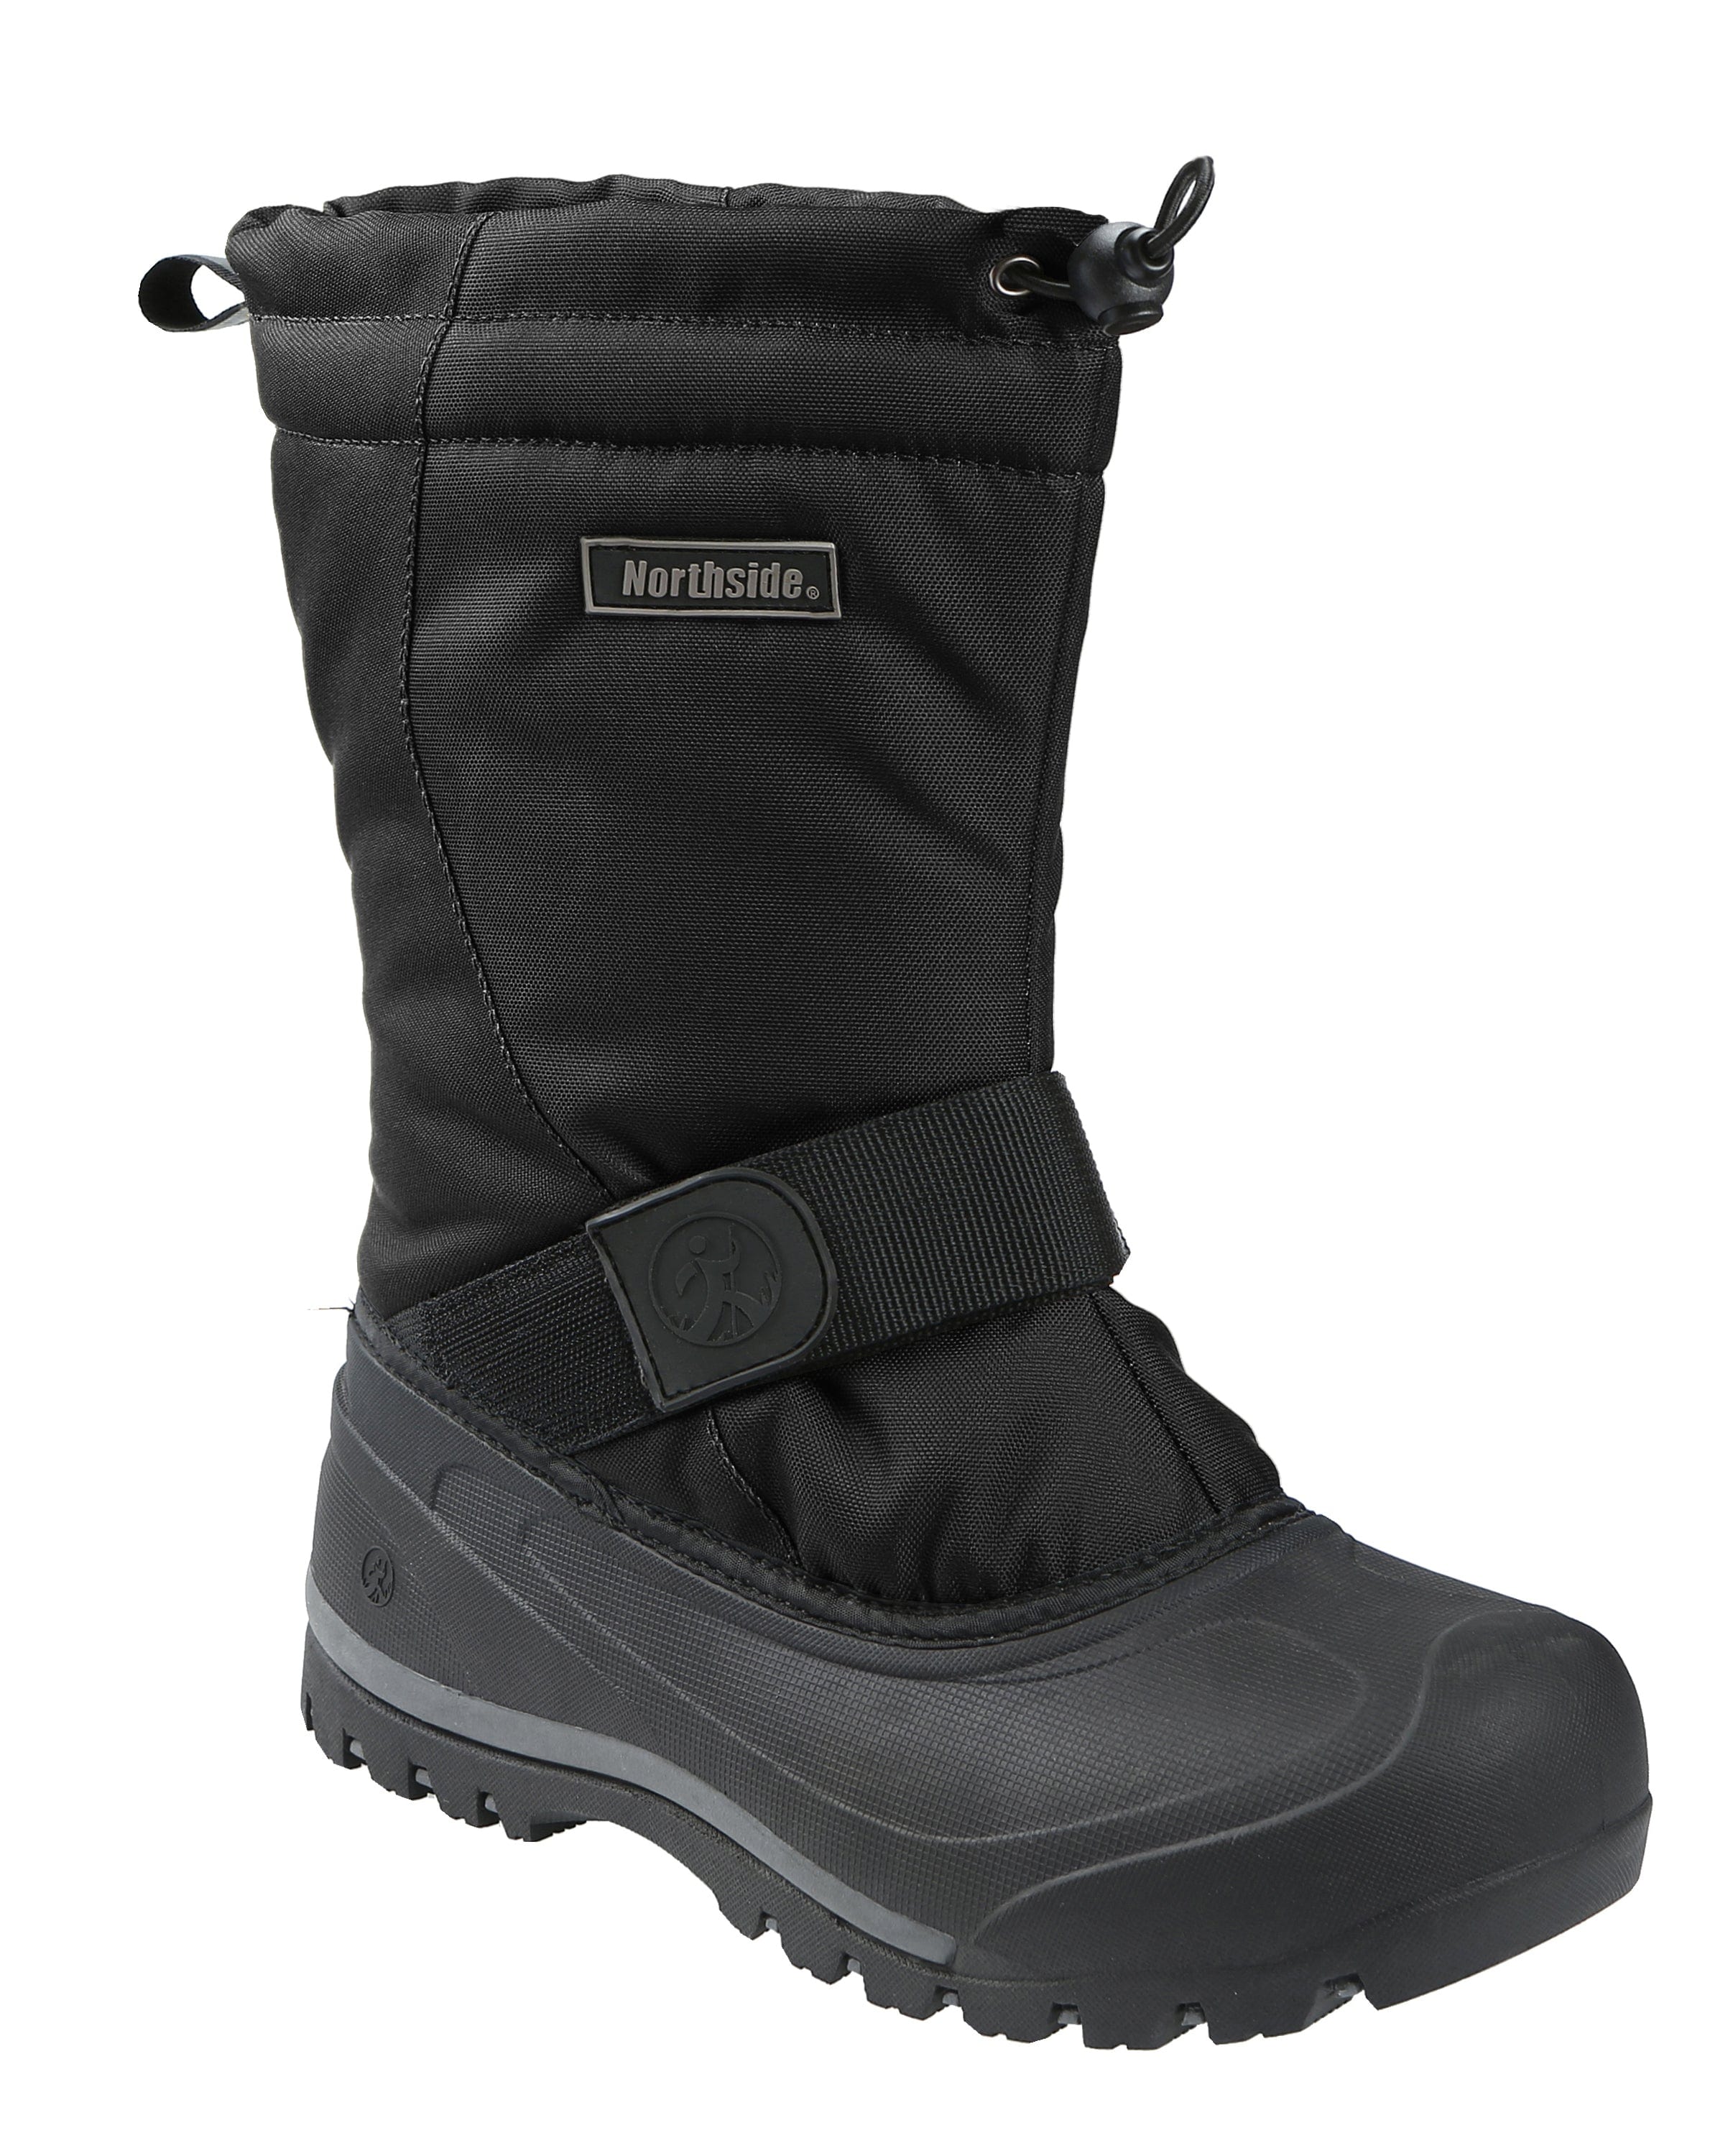 Men's Winter Snow Boots | Waterproof & Insulated